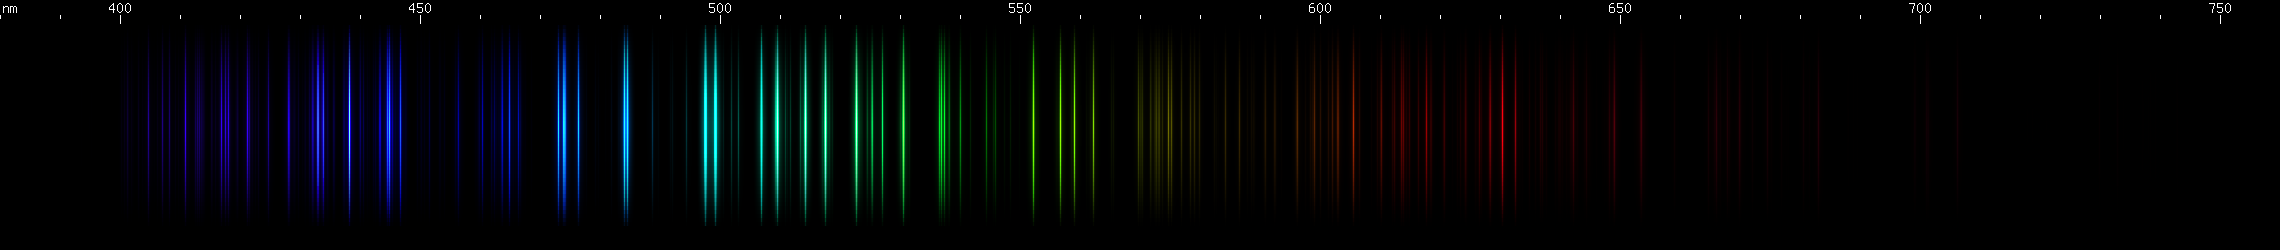 Spectral lines of Selenium.